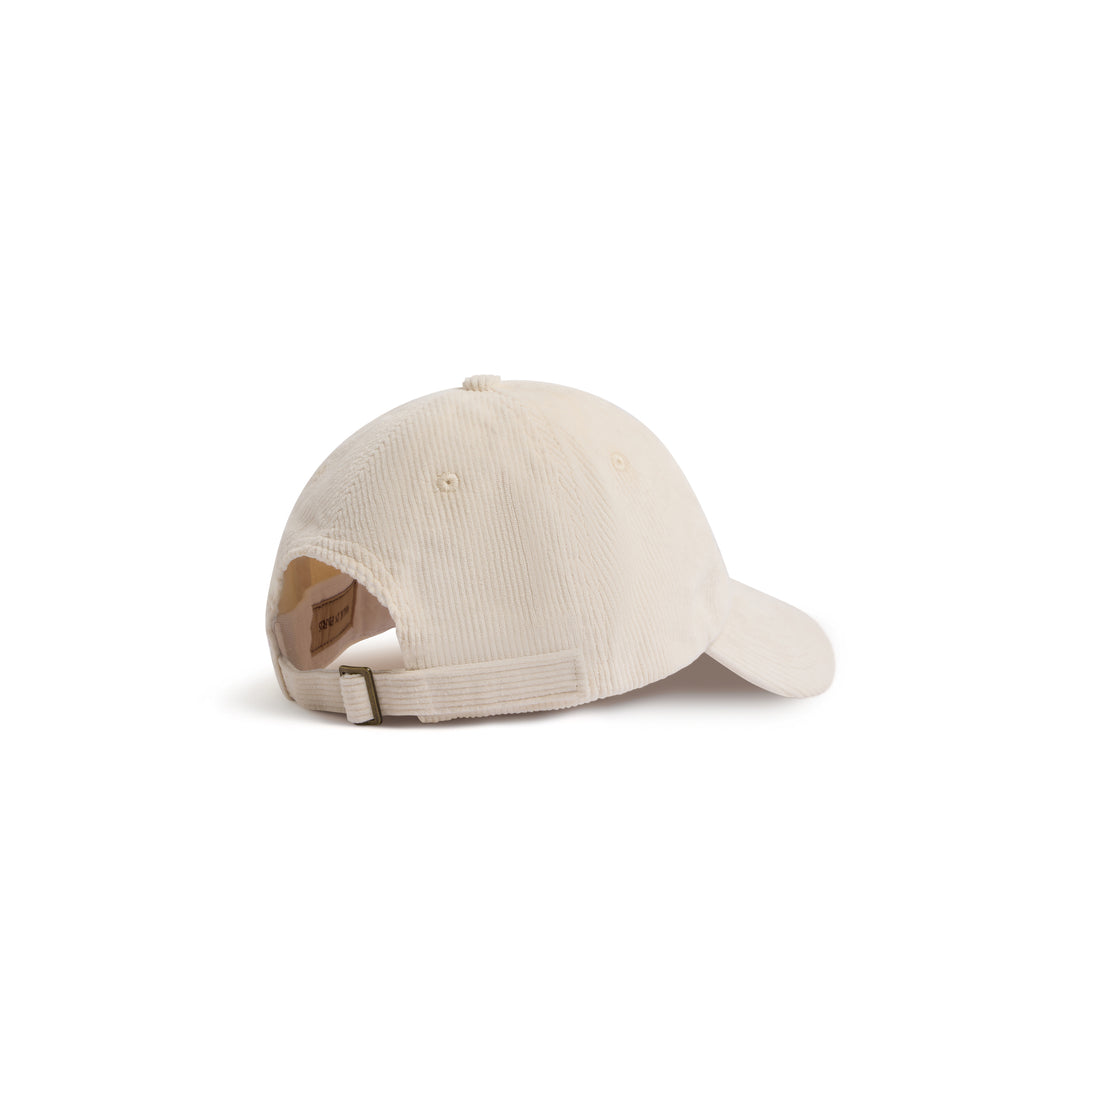 The beige corduroy cap